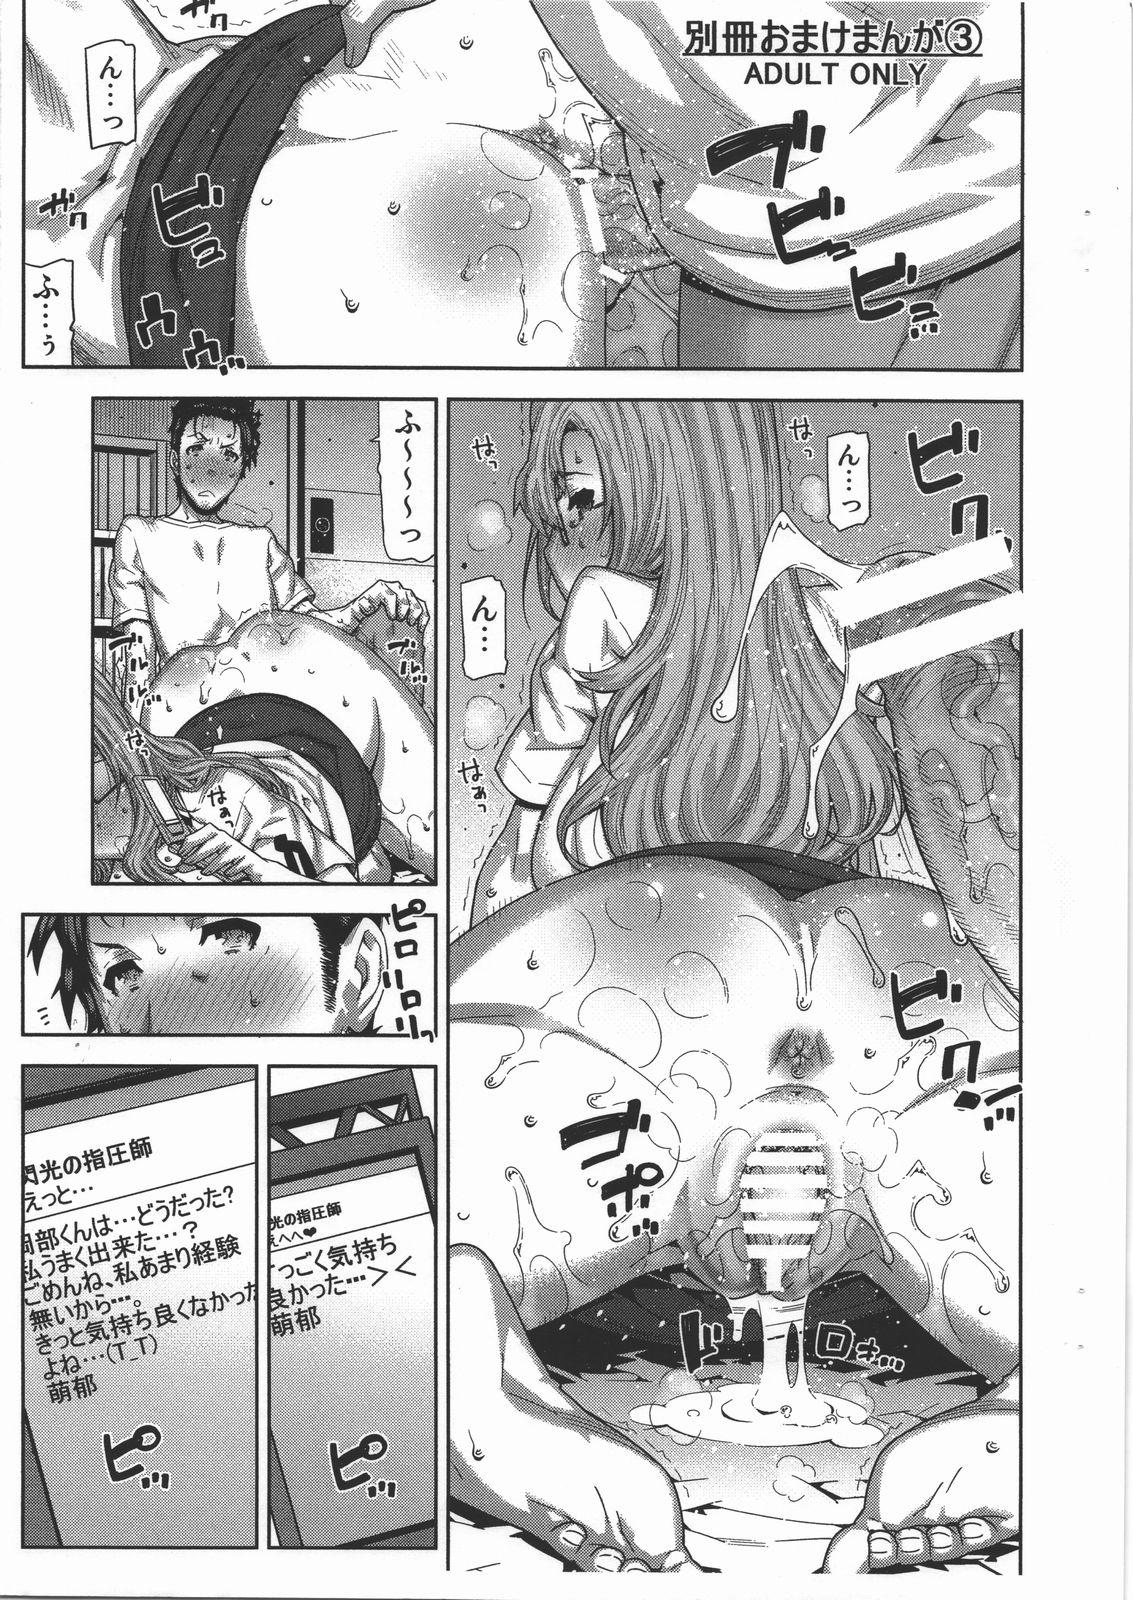 Bessatsu Omake Manga 3 1